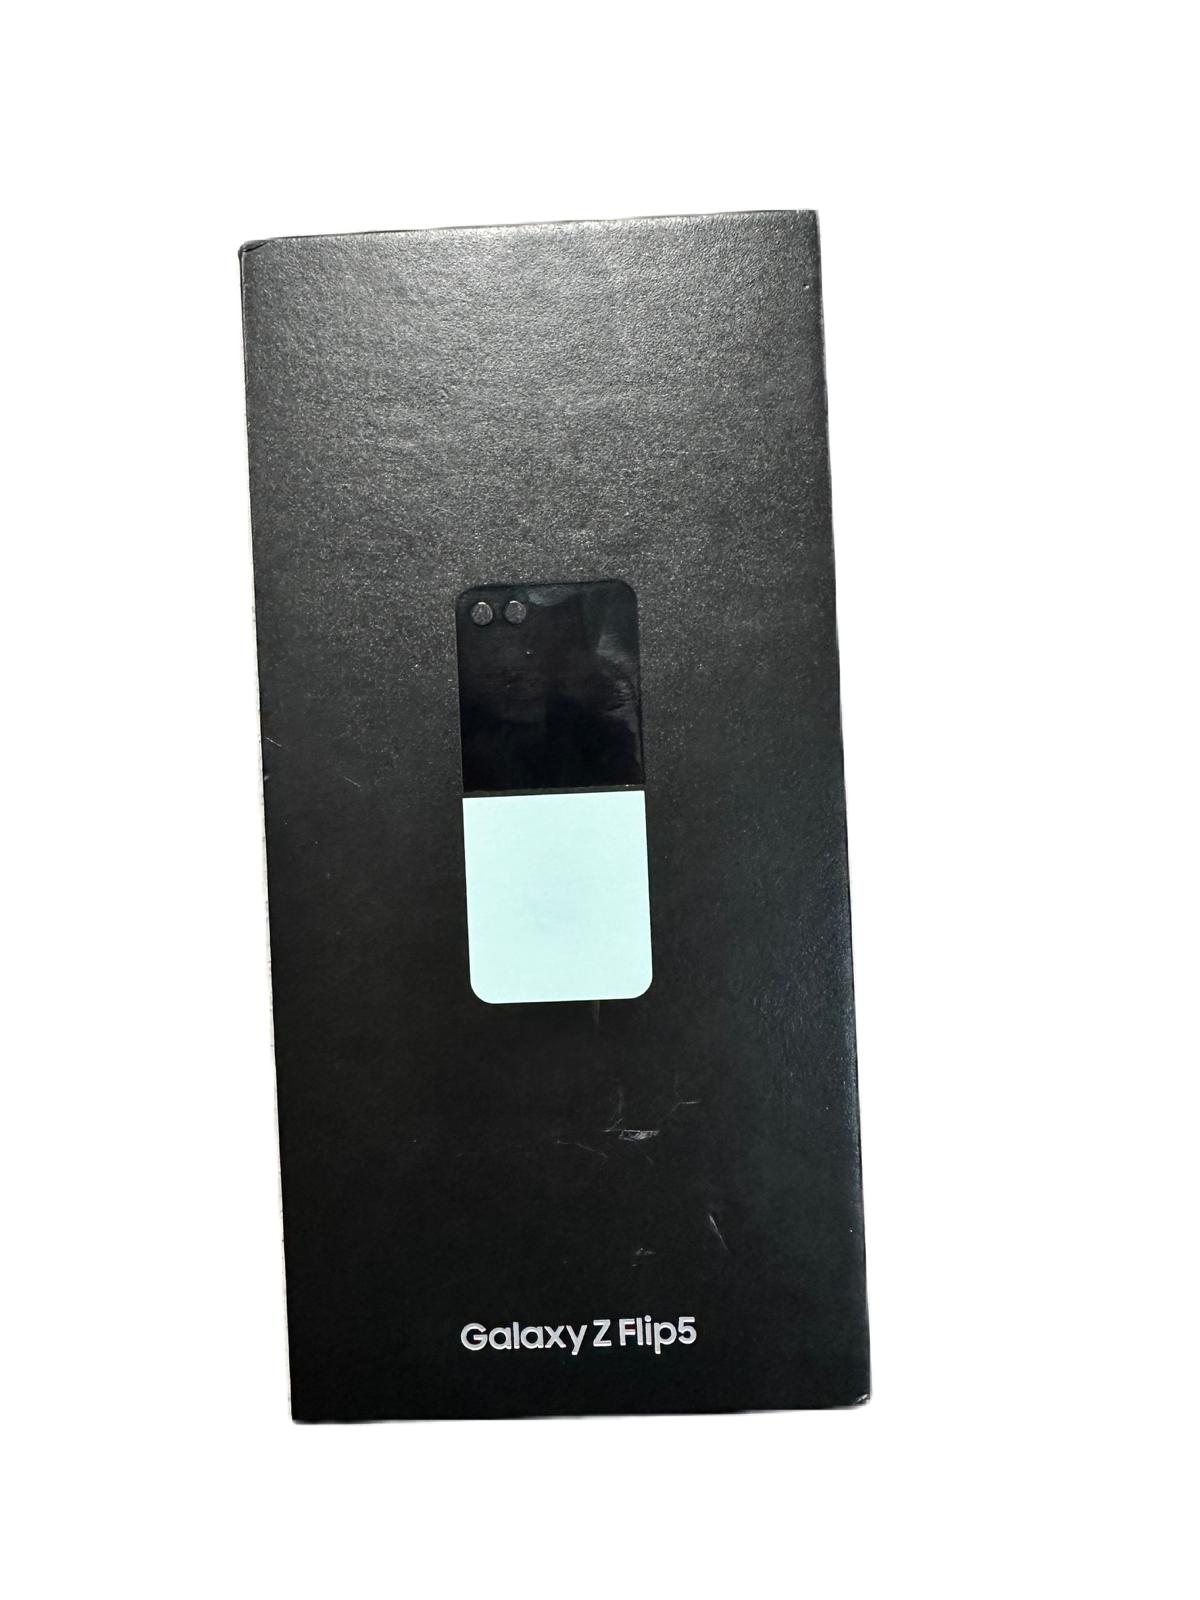 Samsung Z flip 5 Mint colour Boxed Sealed Brand new  